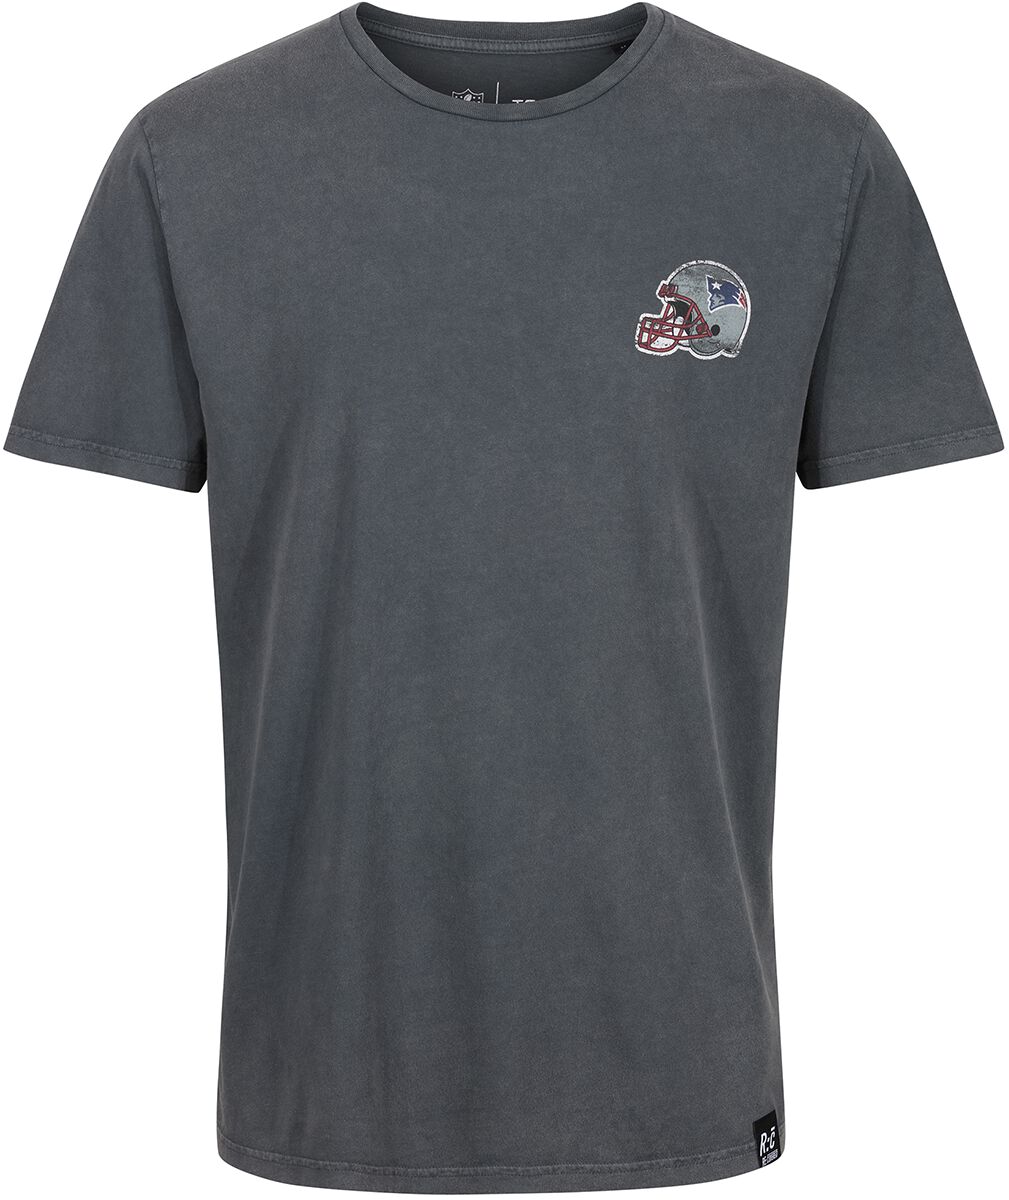 Recovered Clothing T-Shirt - NFL Patriots College Black Washed - S bis XXL - für Männer - Größe M - multicolor